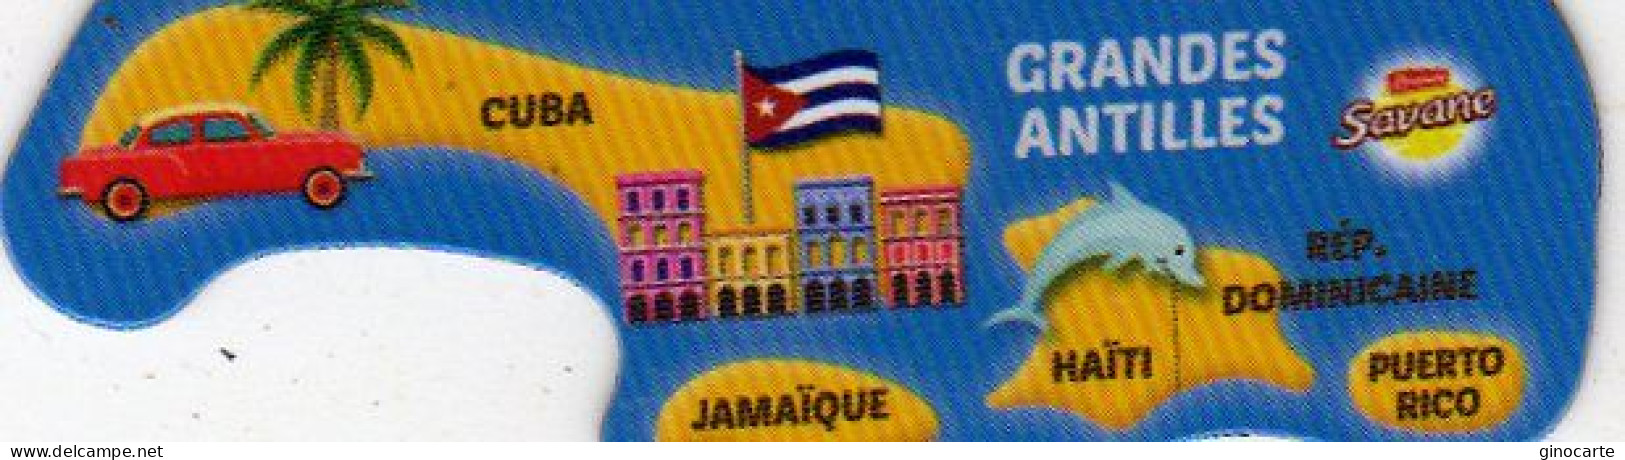 Magnets Magnet Brossard Savane Continent Amerique Grandes Antilles - Tourisme